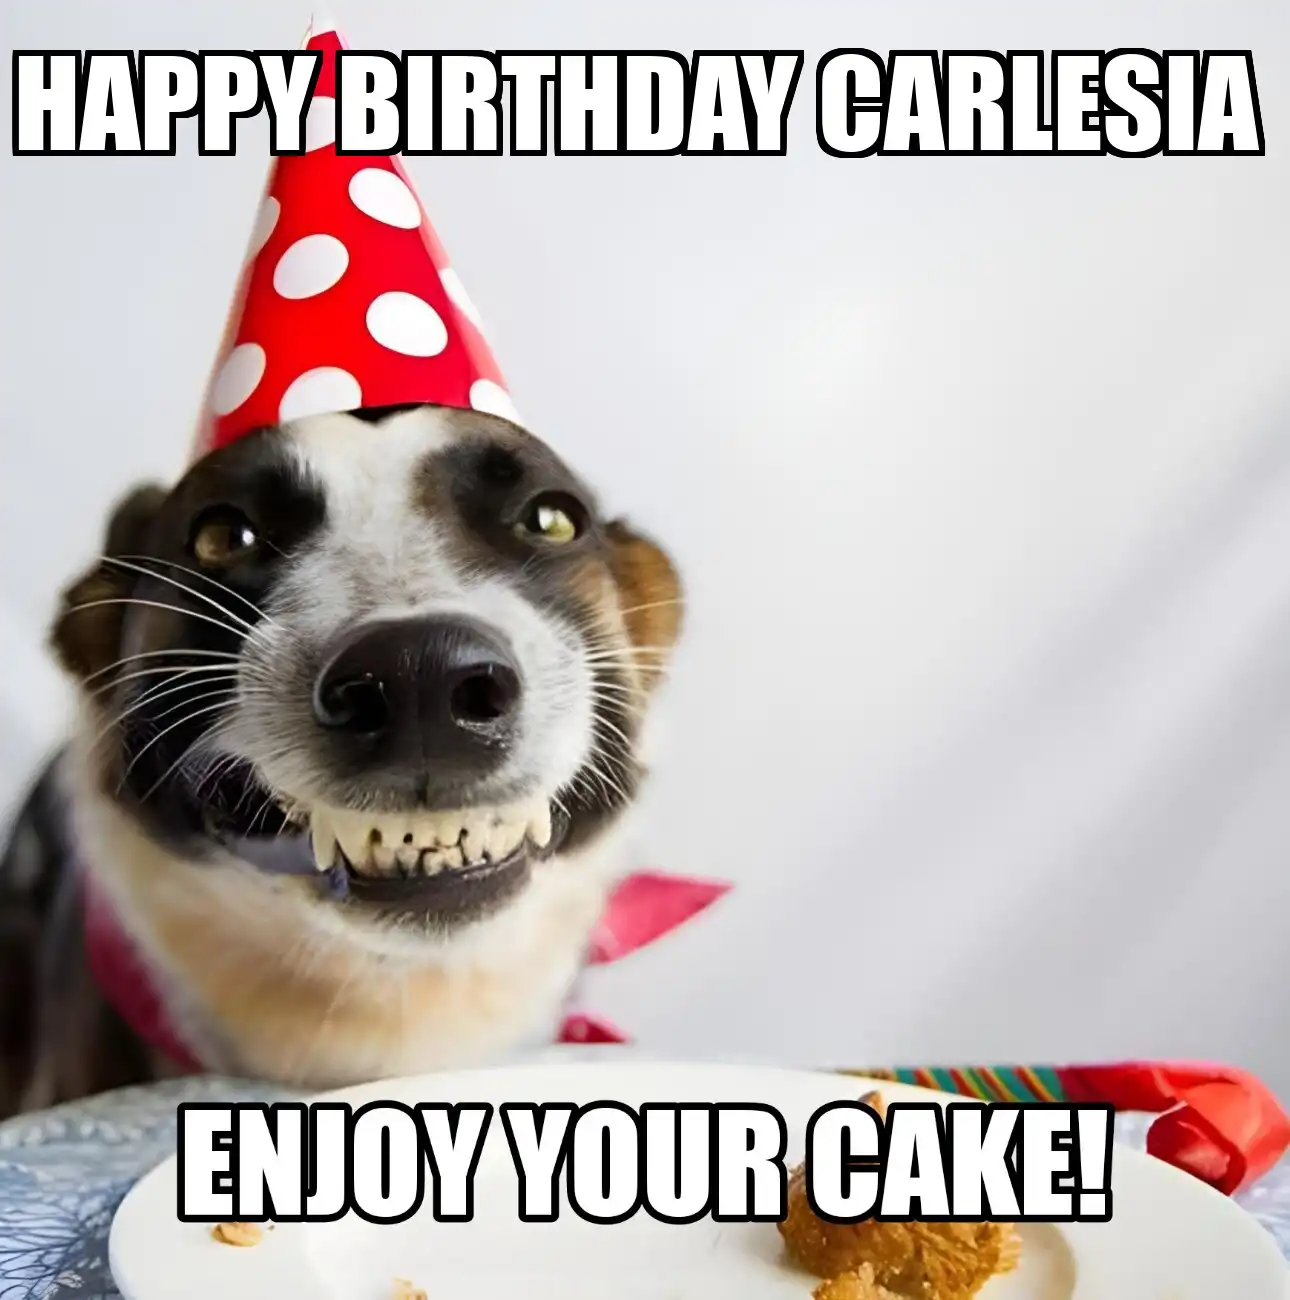 Happy Birthday Carlesia Enjoy Your Cake Dog Meme